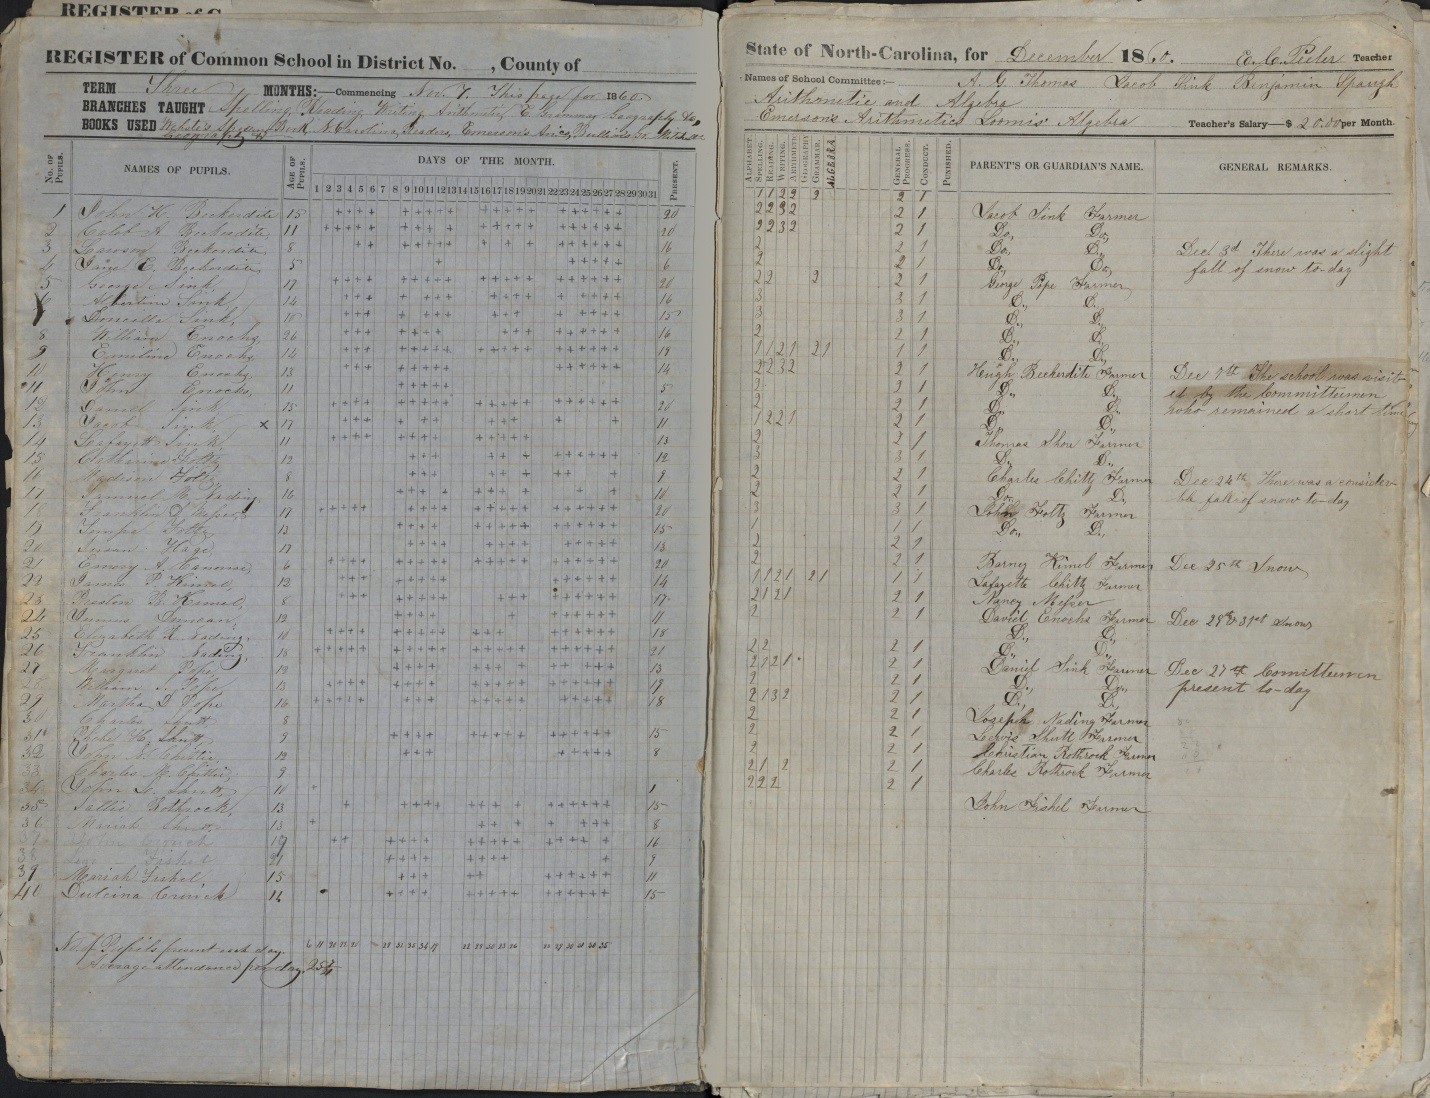 1860 common school register from Forsyth County, North Carolina.